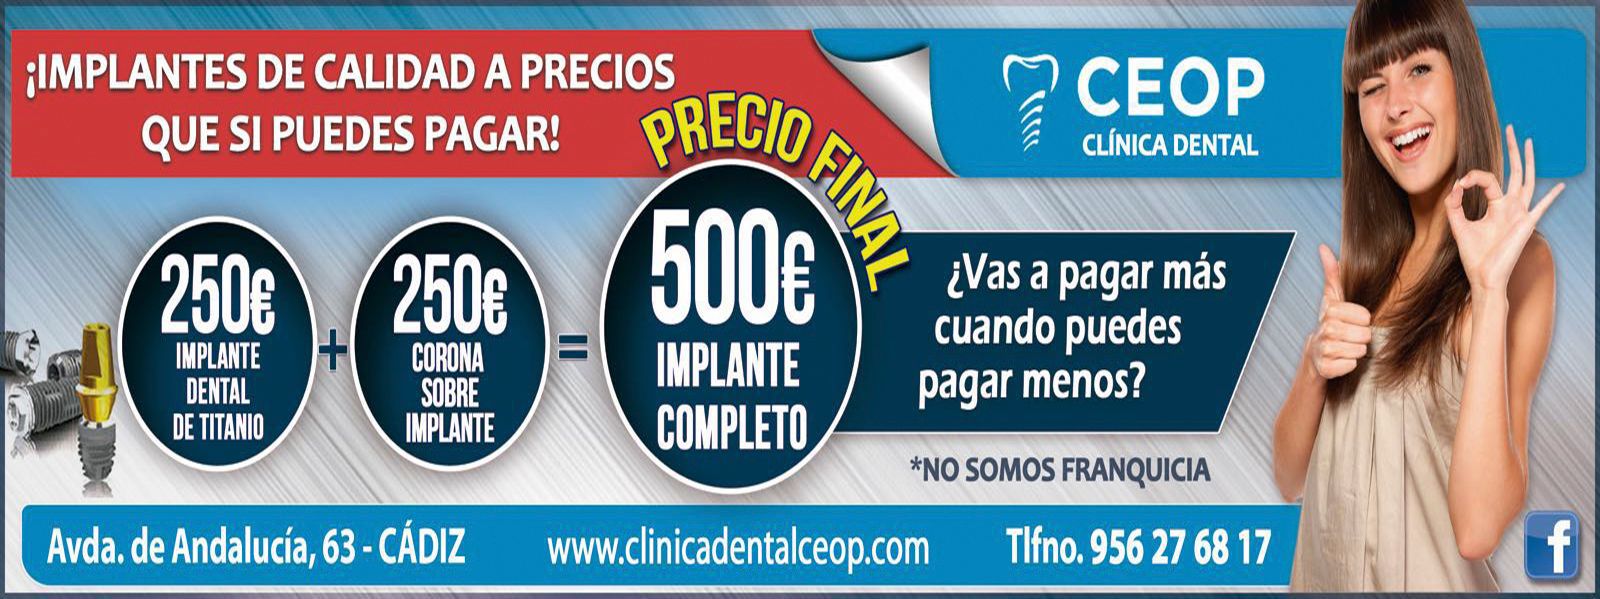 CEOP - Centro de Especialidades Odontológicas Premium banner 2